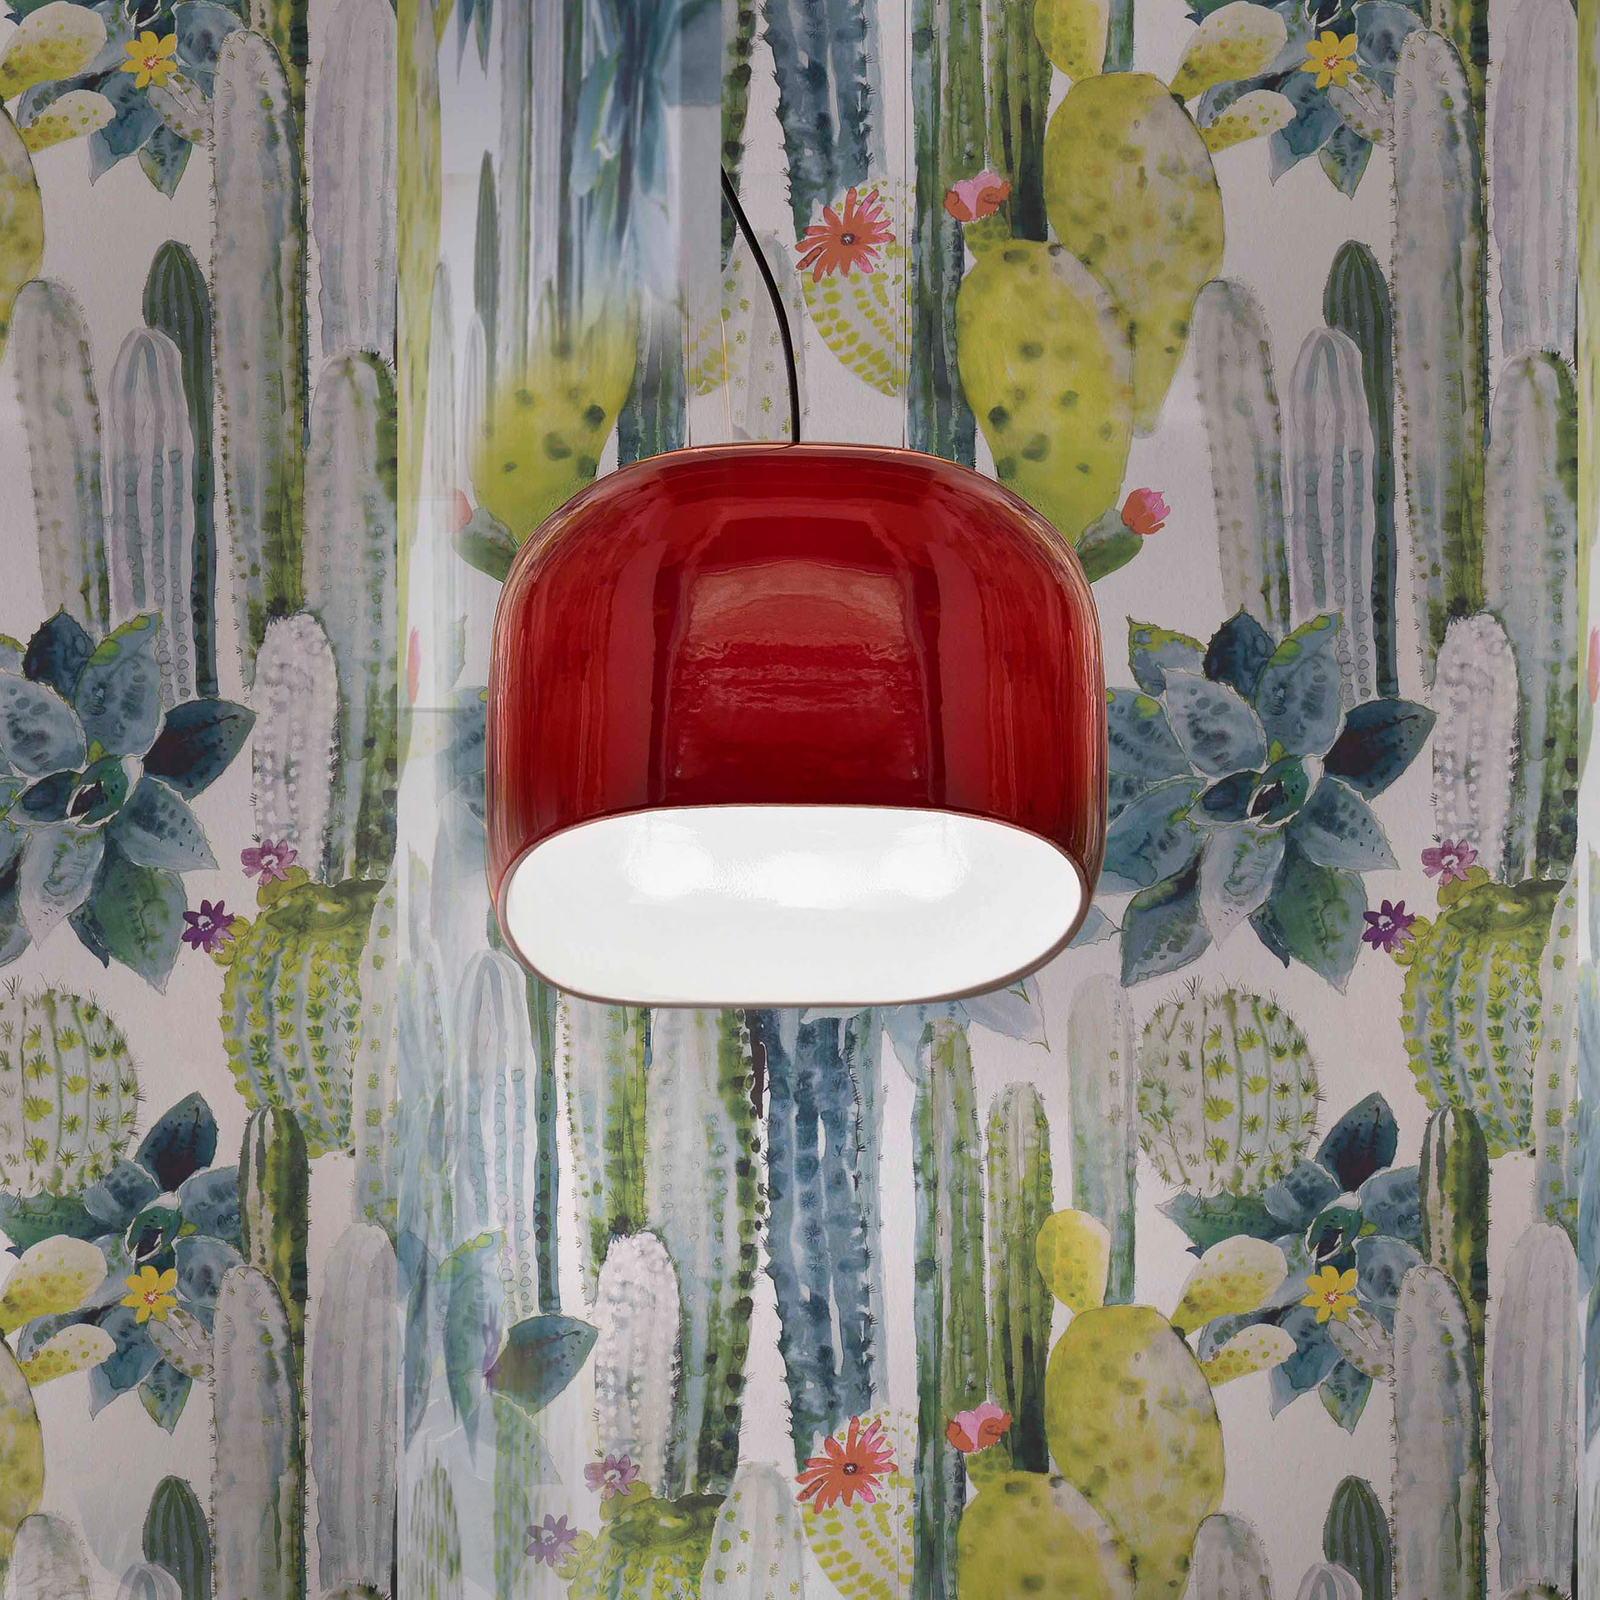 Ayrton hanging lamp, ceramics, 29 cm, red